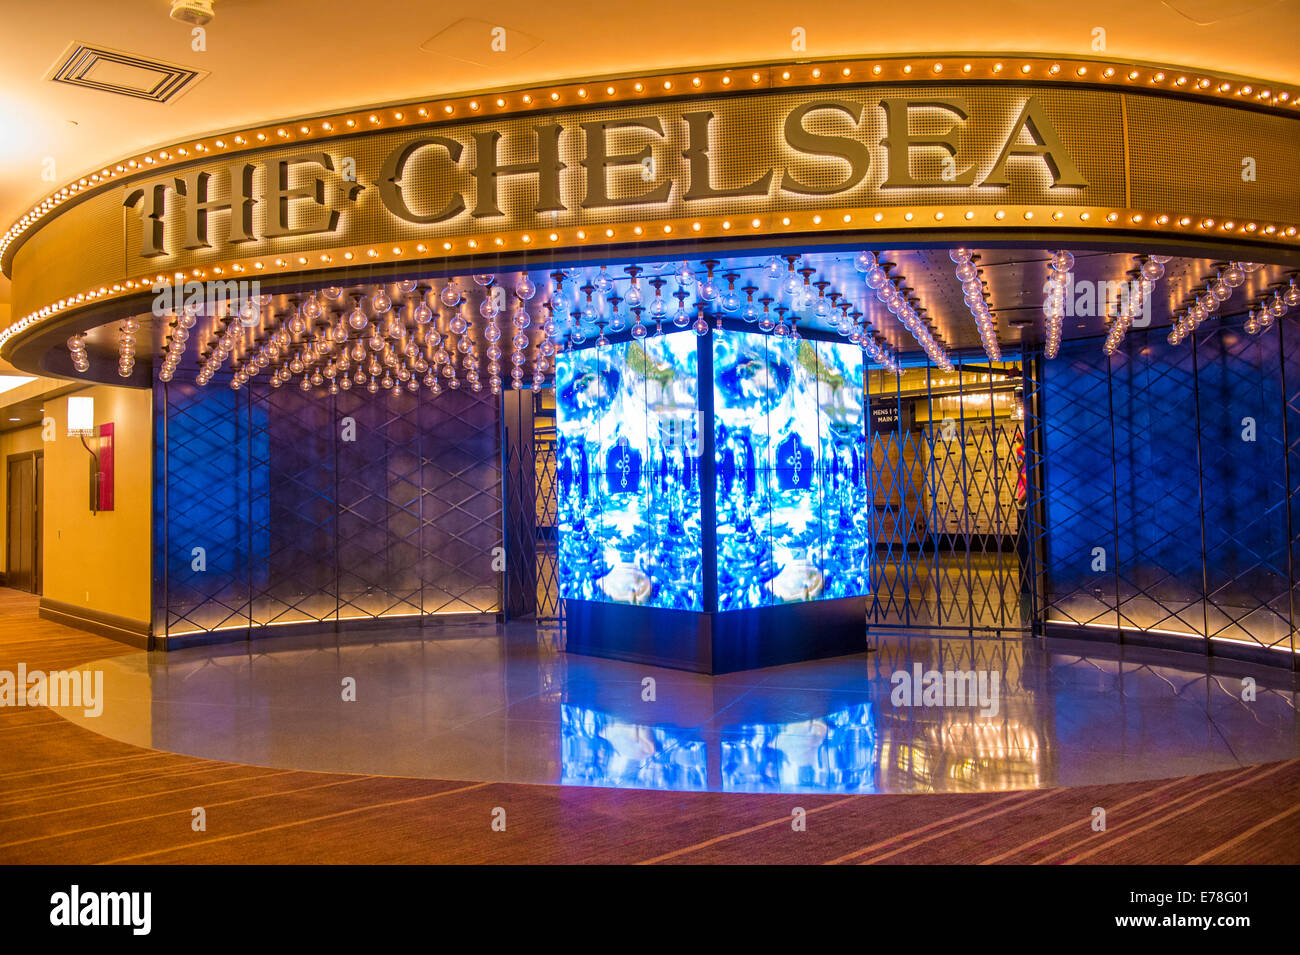 The Chelsea event venue in Cosmopolitan hotel in Las Vegas Stock Photo -  Alamy